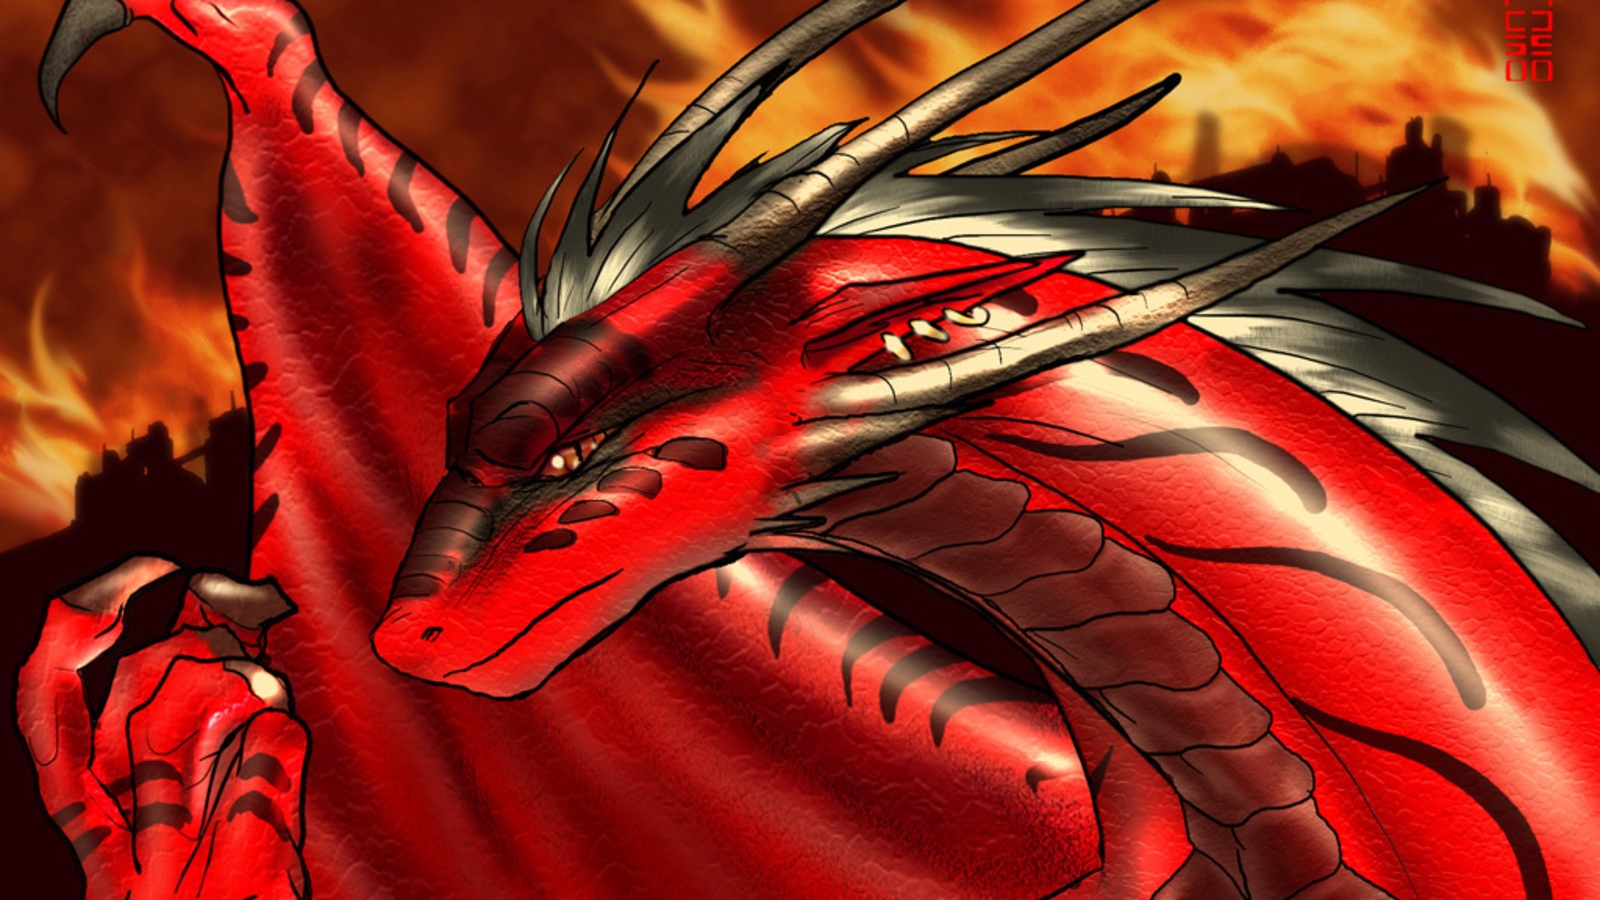 Red Dragon01 Dragons Wallpaper